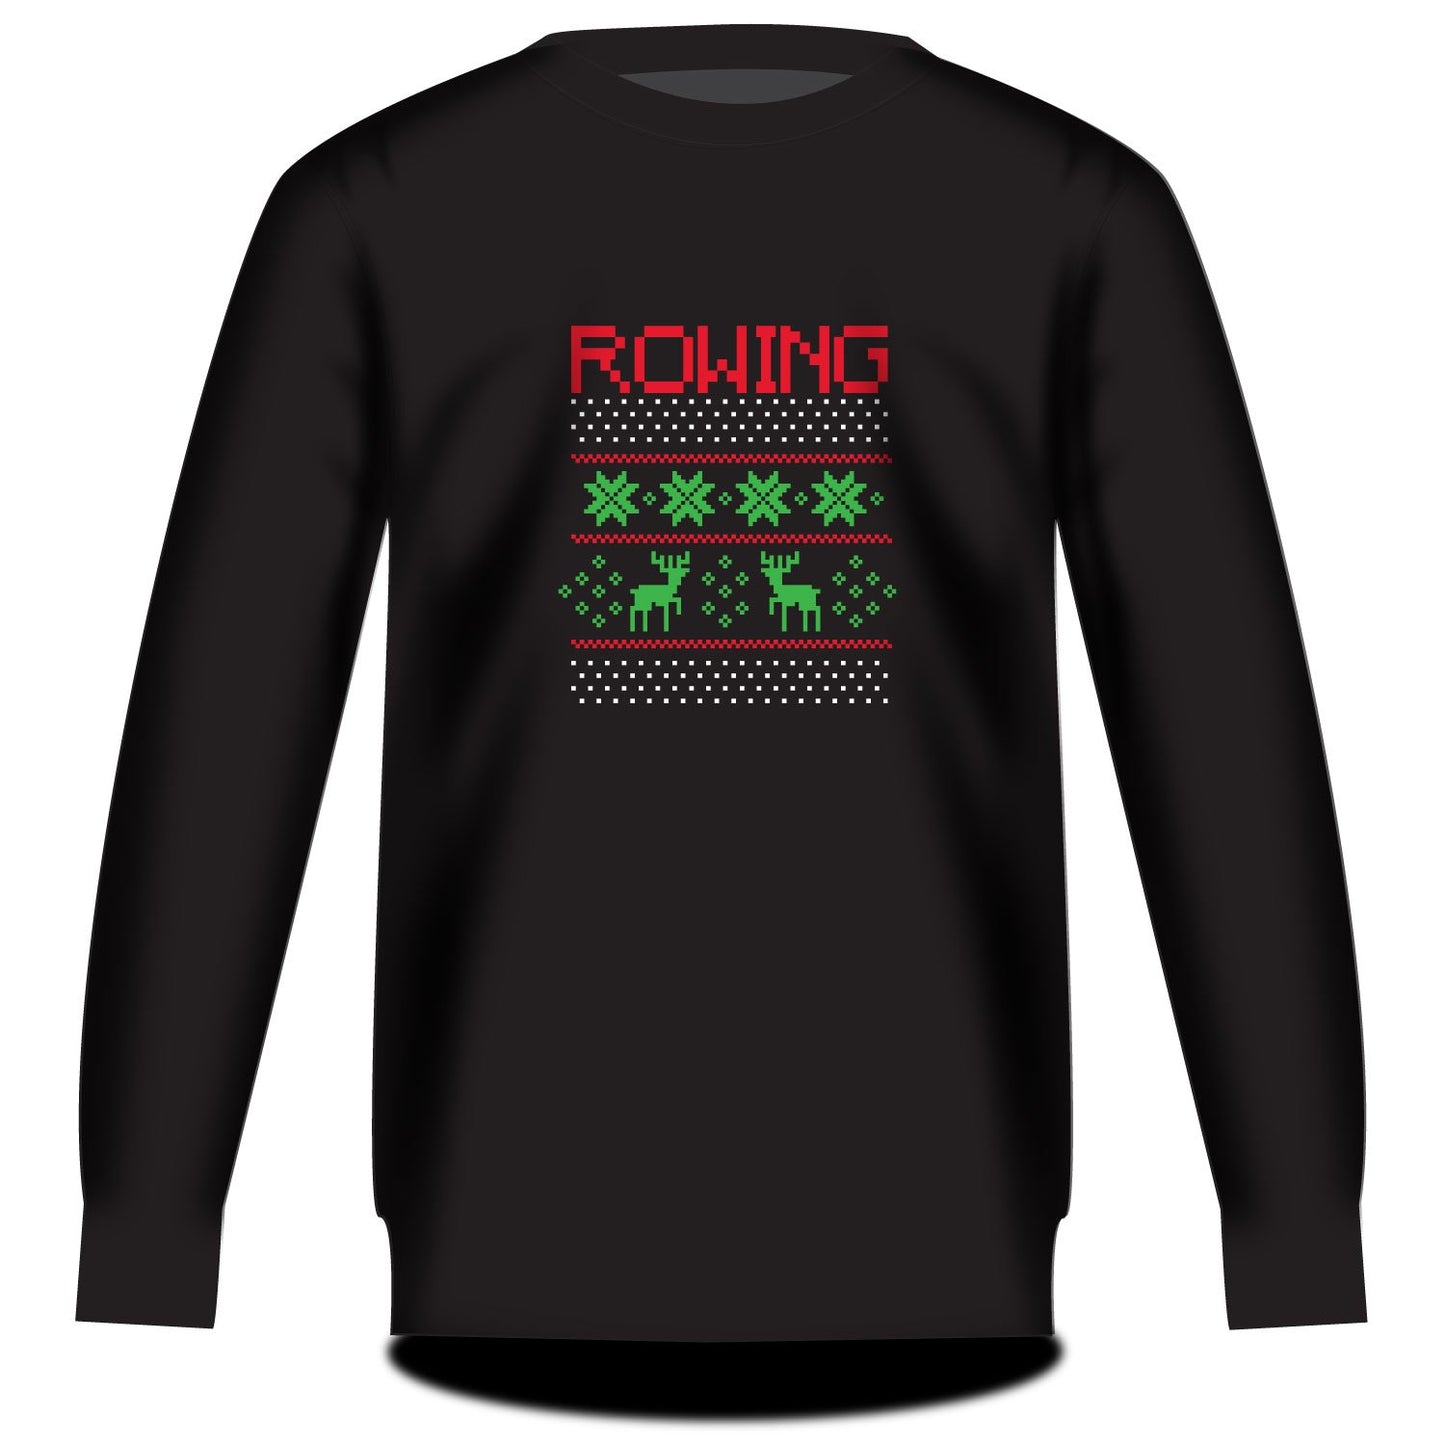 Stitch Rowing Xmas Jumper Sweatshirt